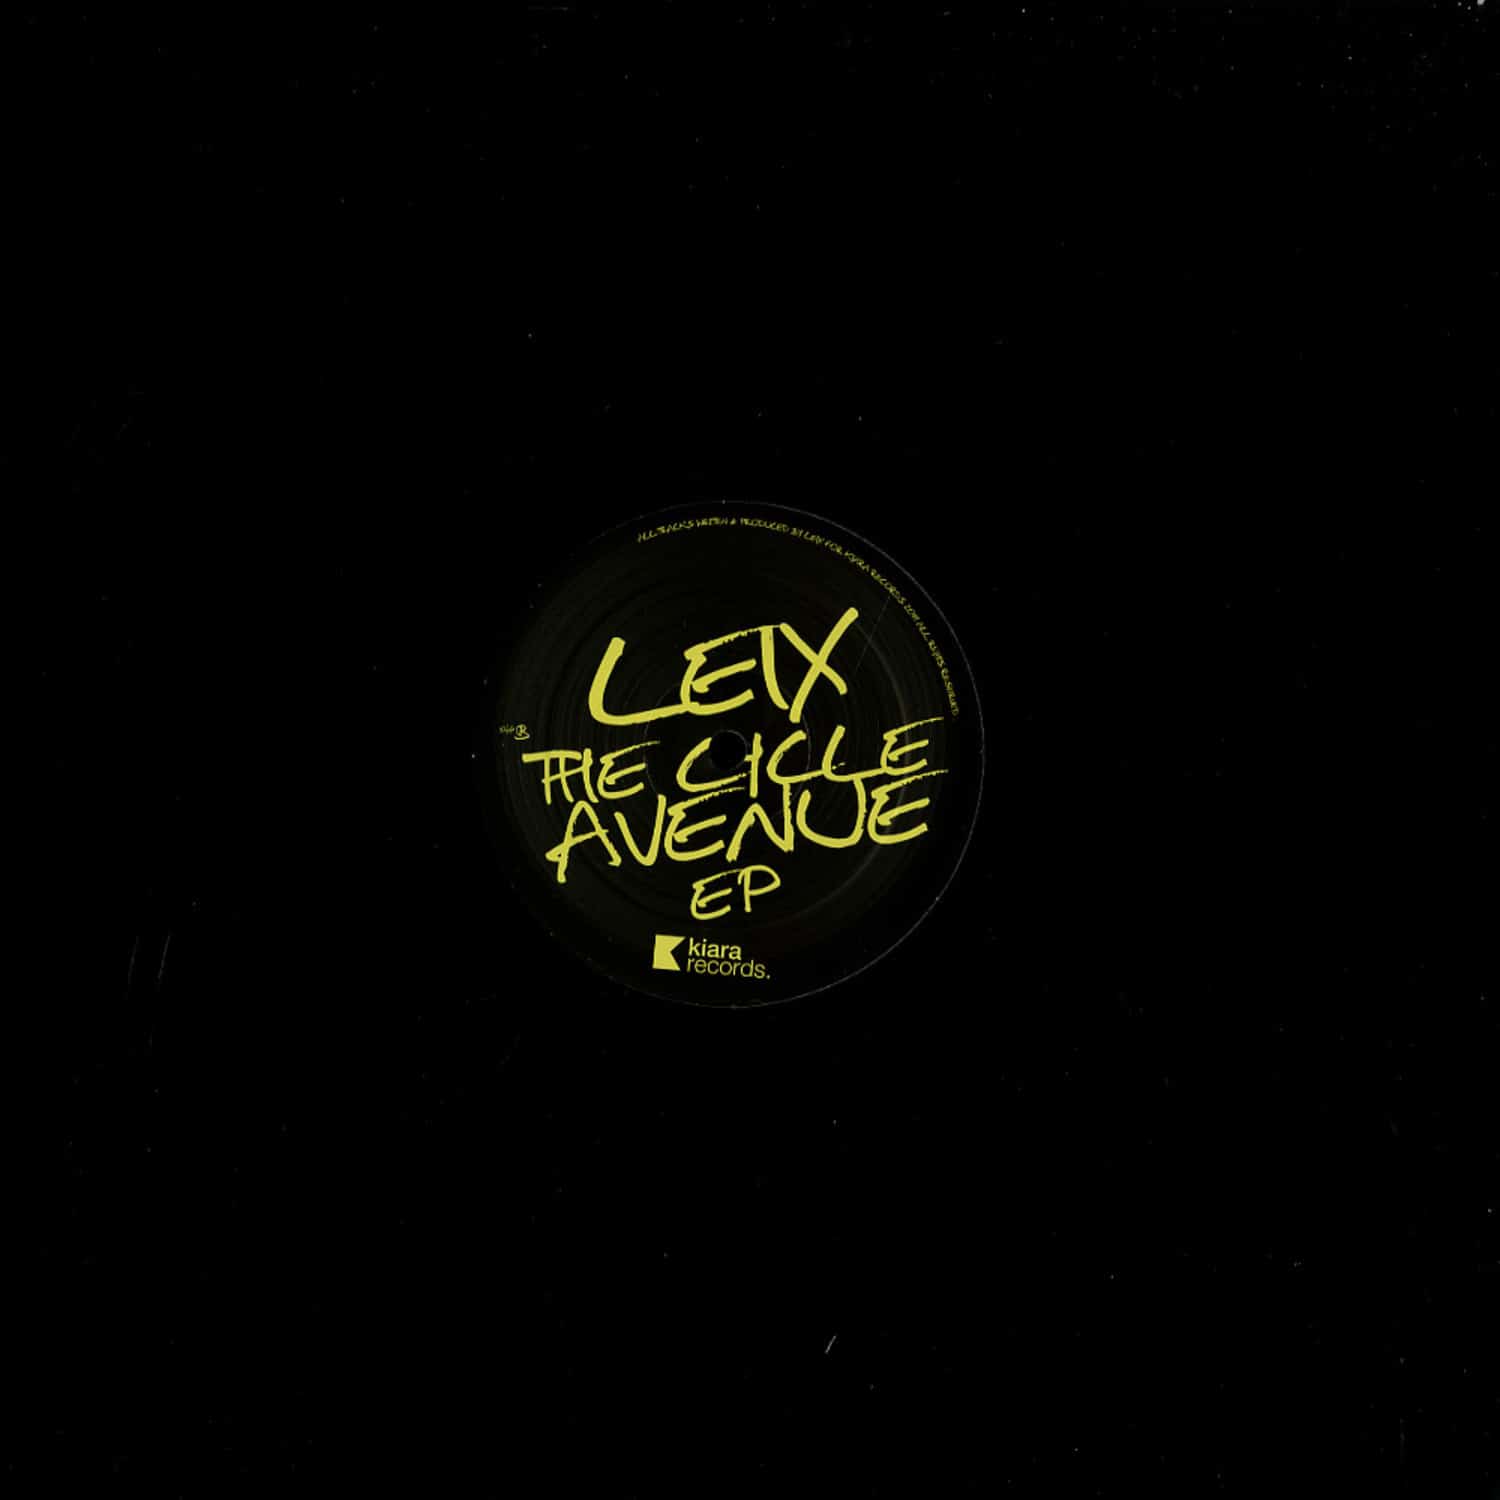 Leix - THE CYCLE AVENUE EP